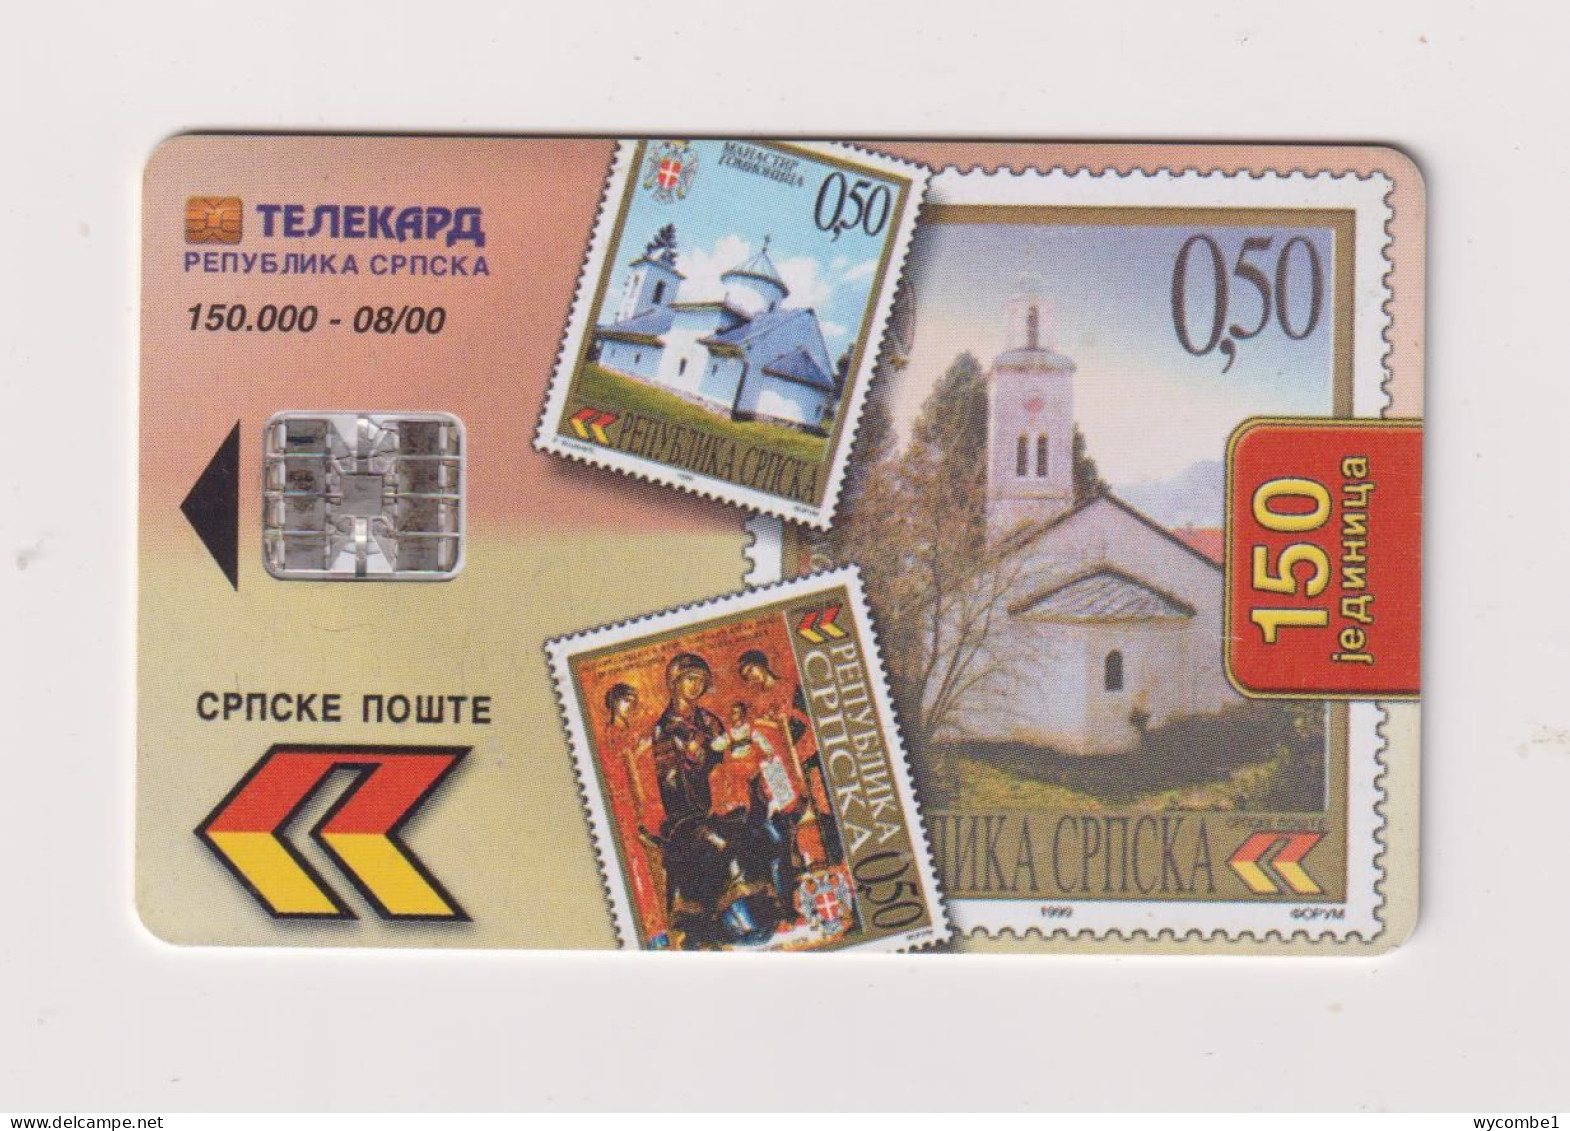 SERBIA  - Postage Stamps Chip Phonecard - Yugoslavia